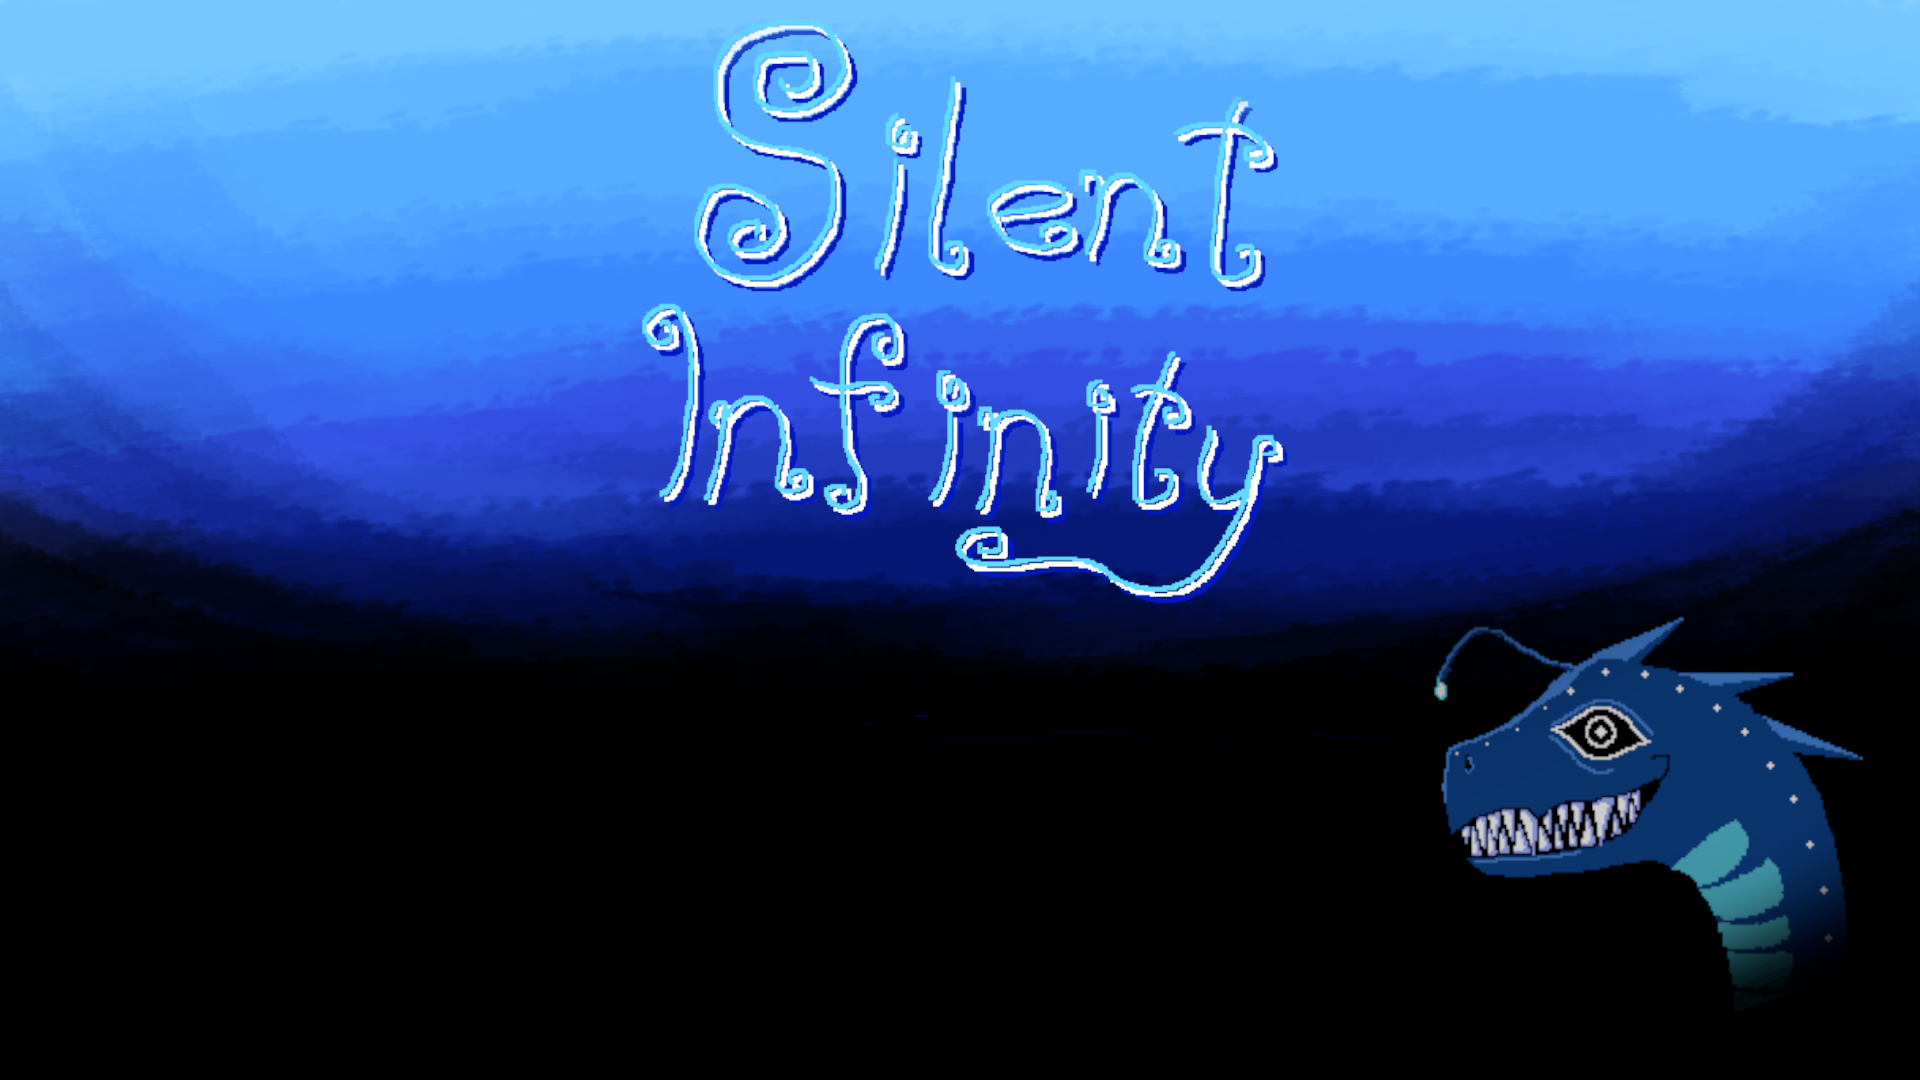 Silent Infinity